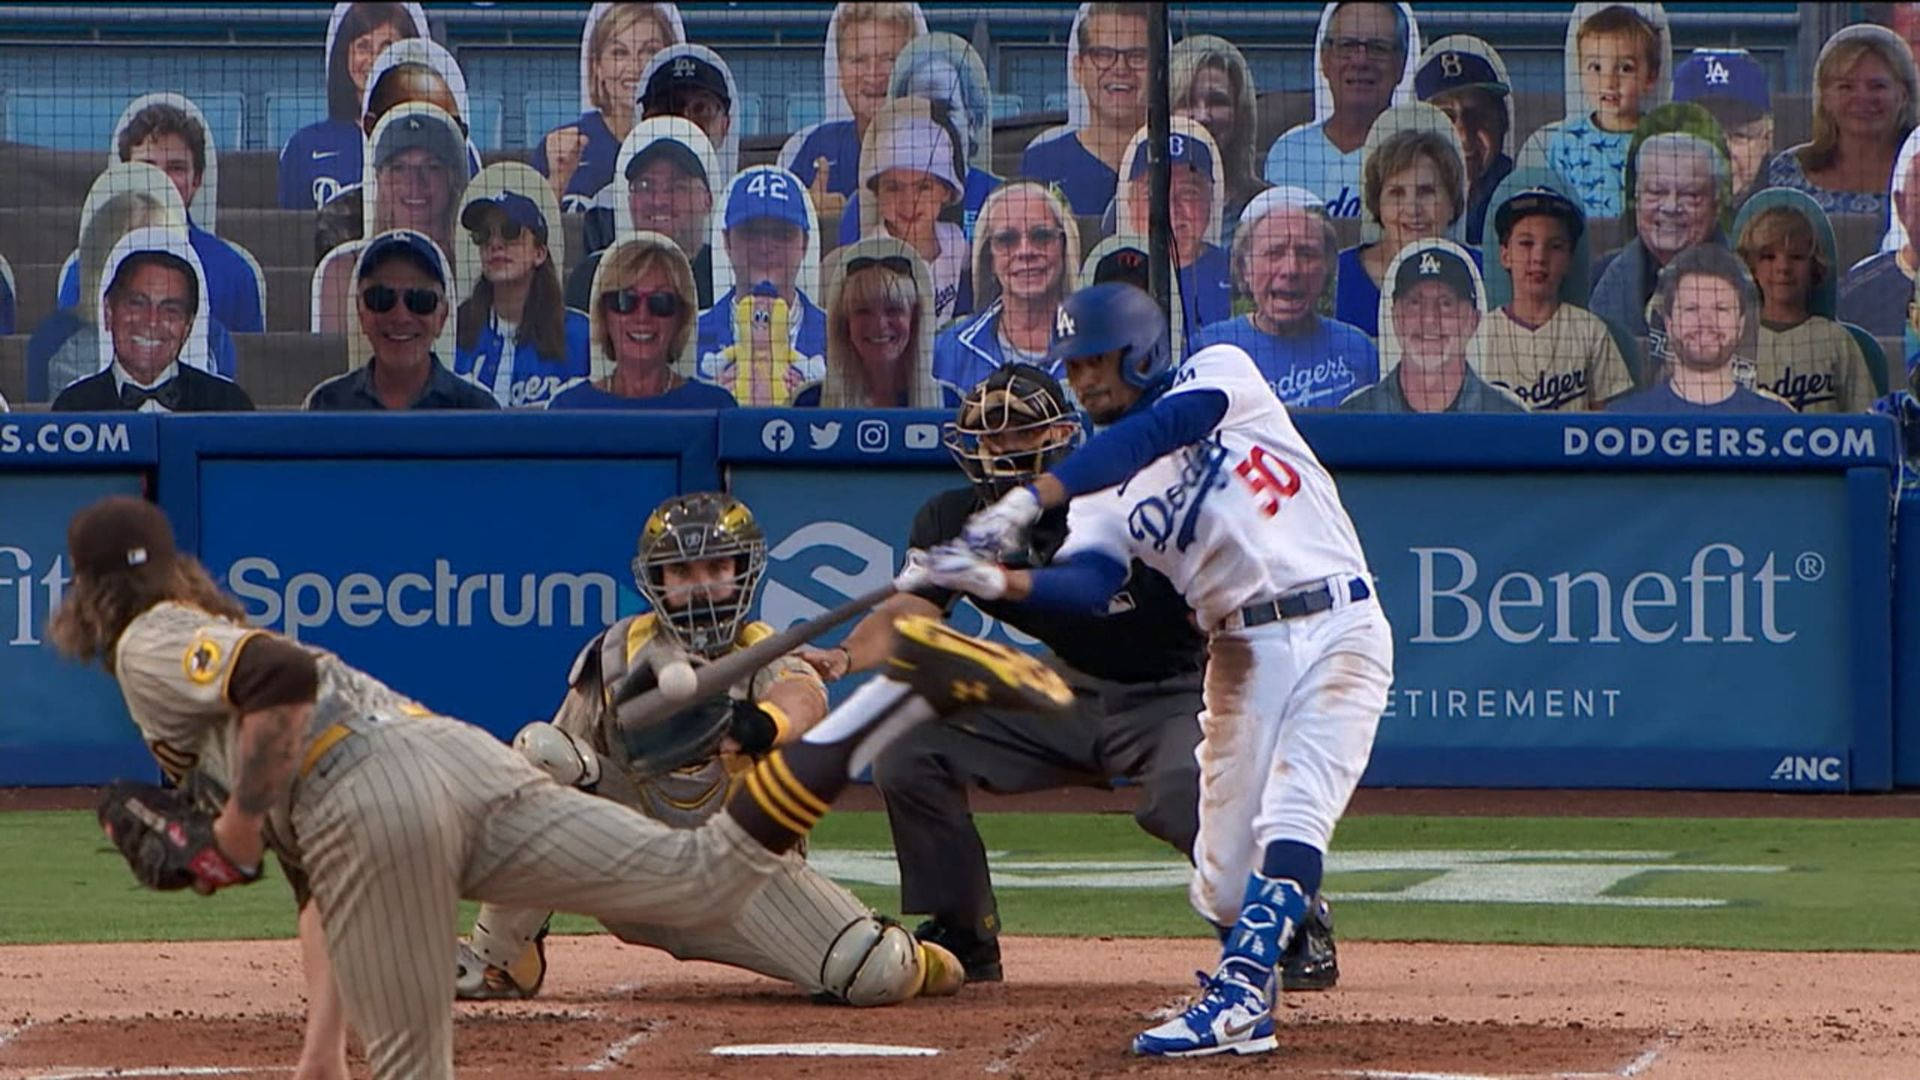 Download Joc Pederson Roaring For Dodgers Wallpaper